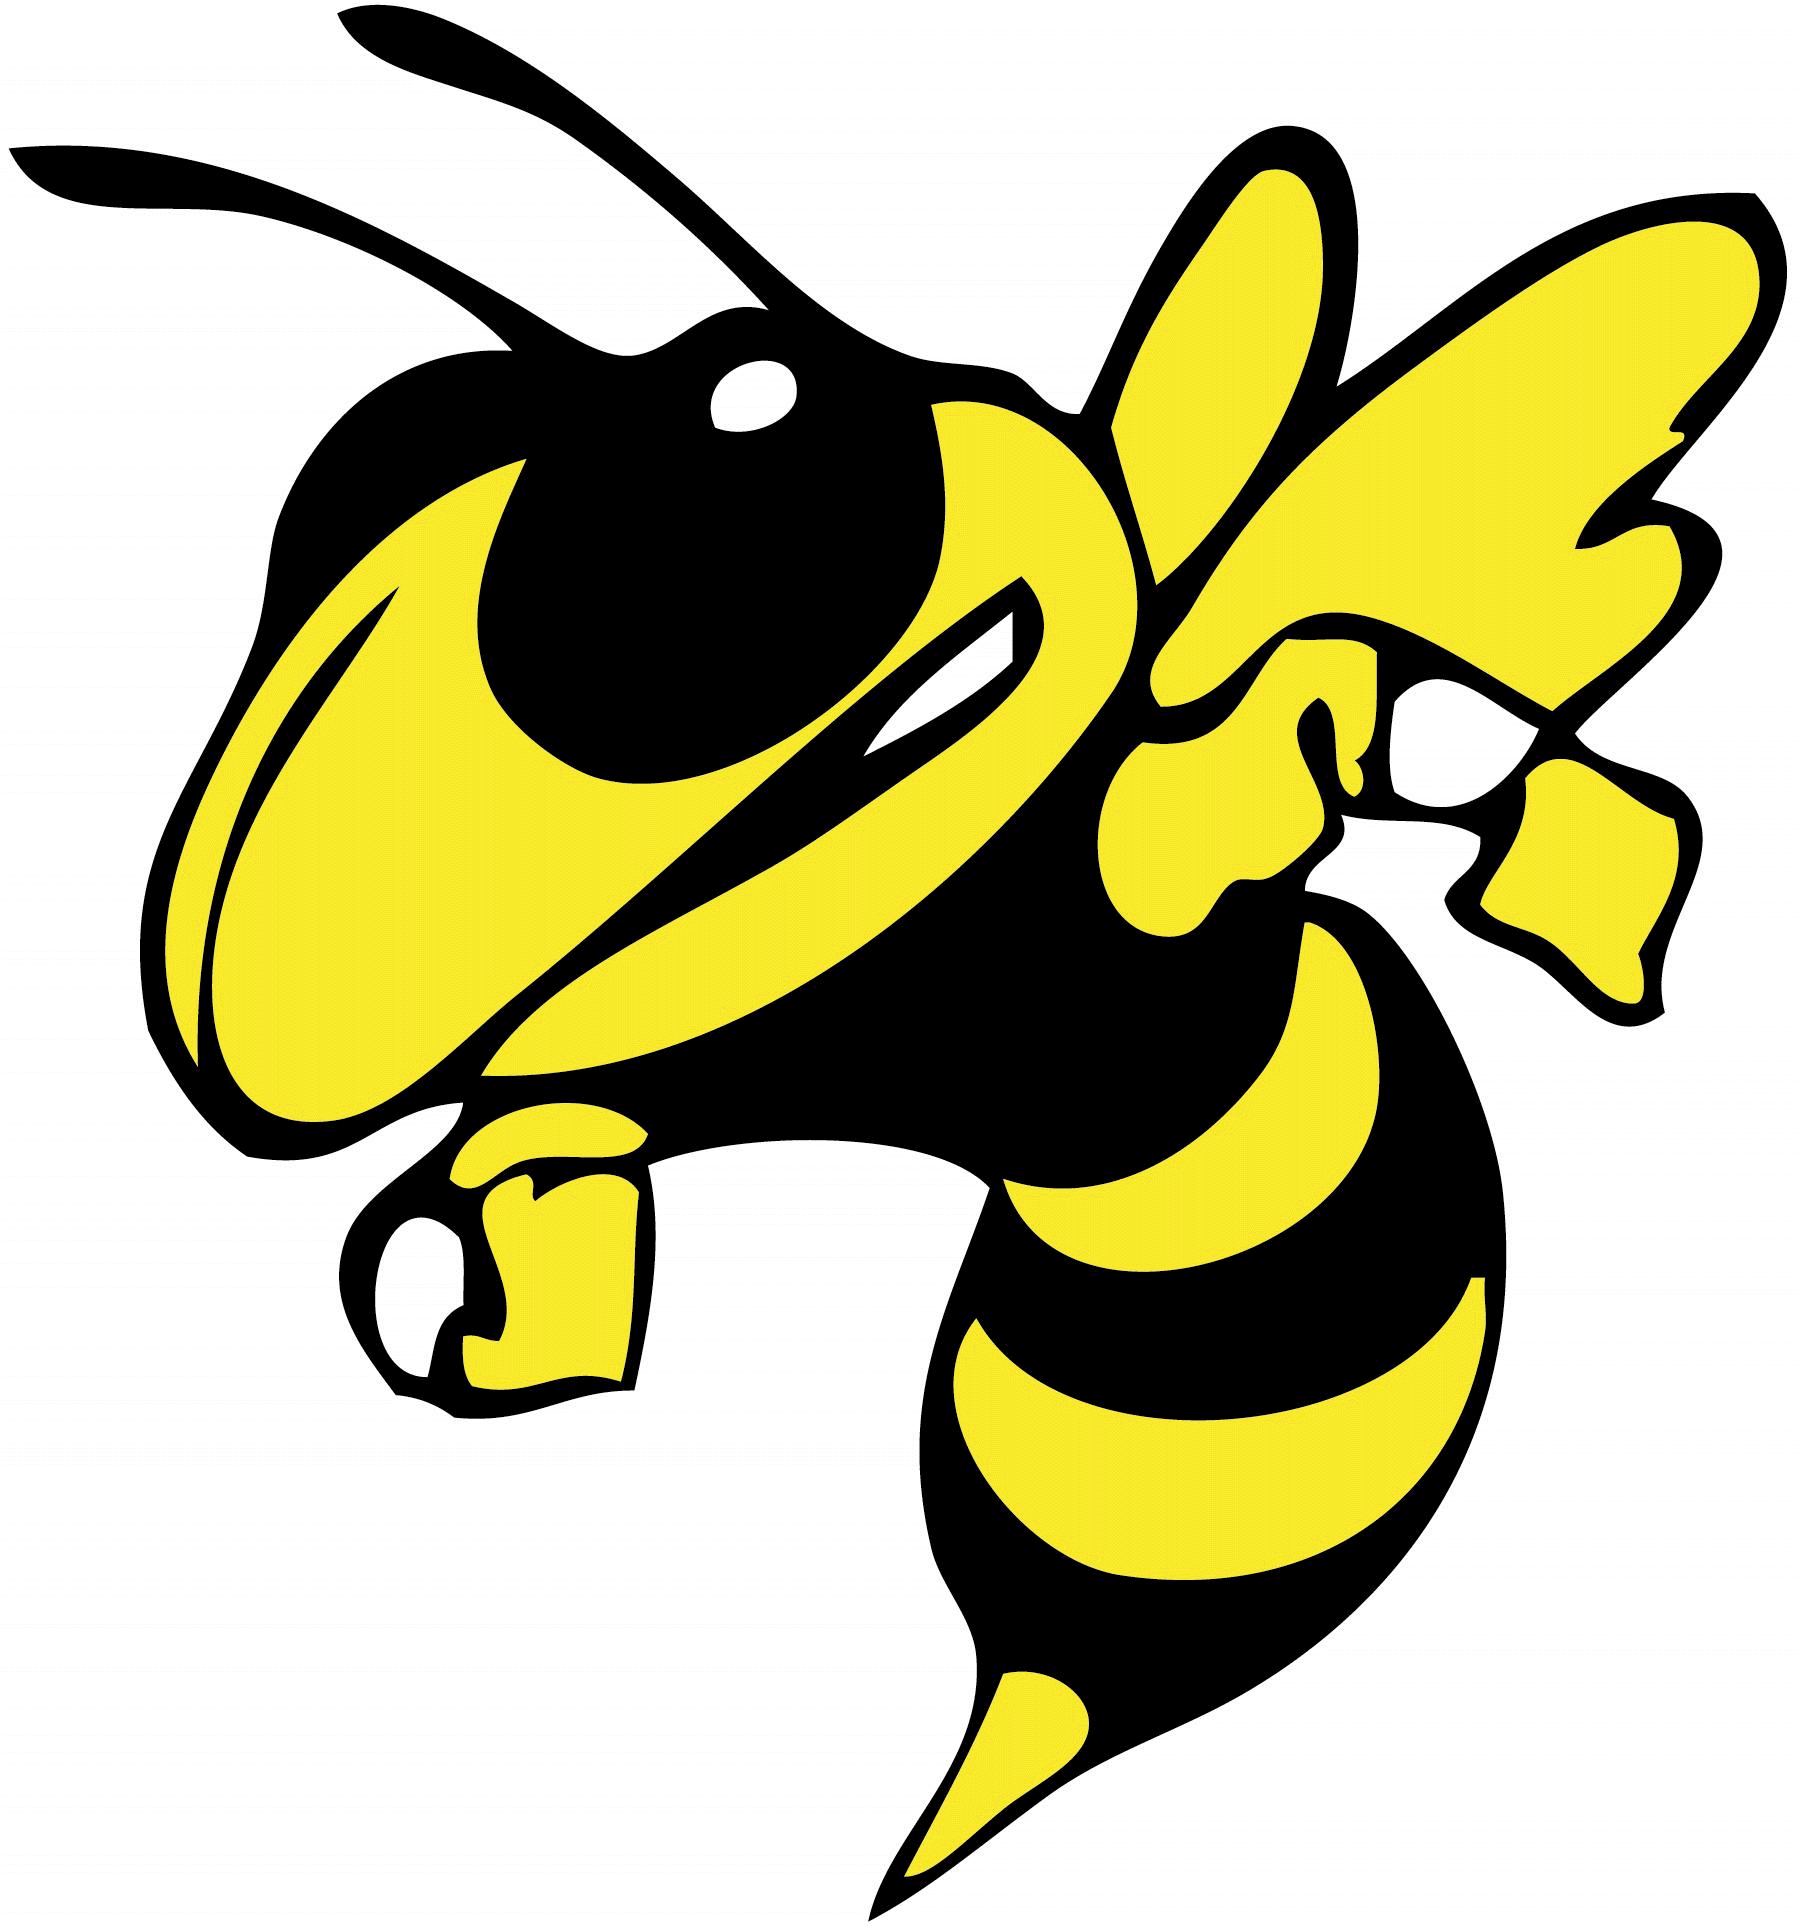 Images For > Hornet Cartoon Mascot